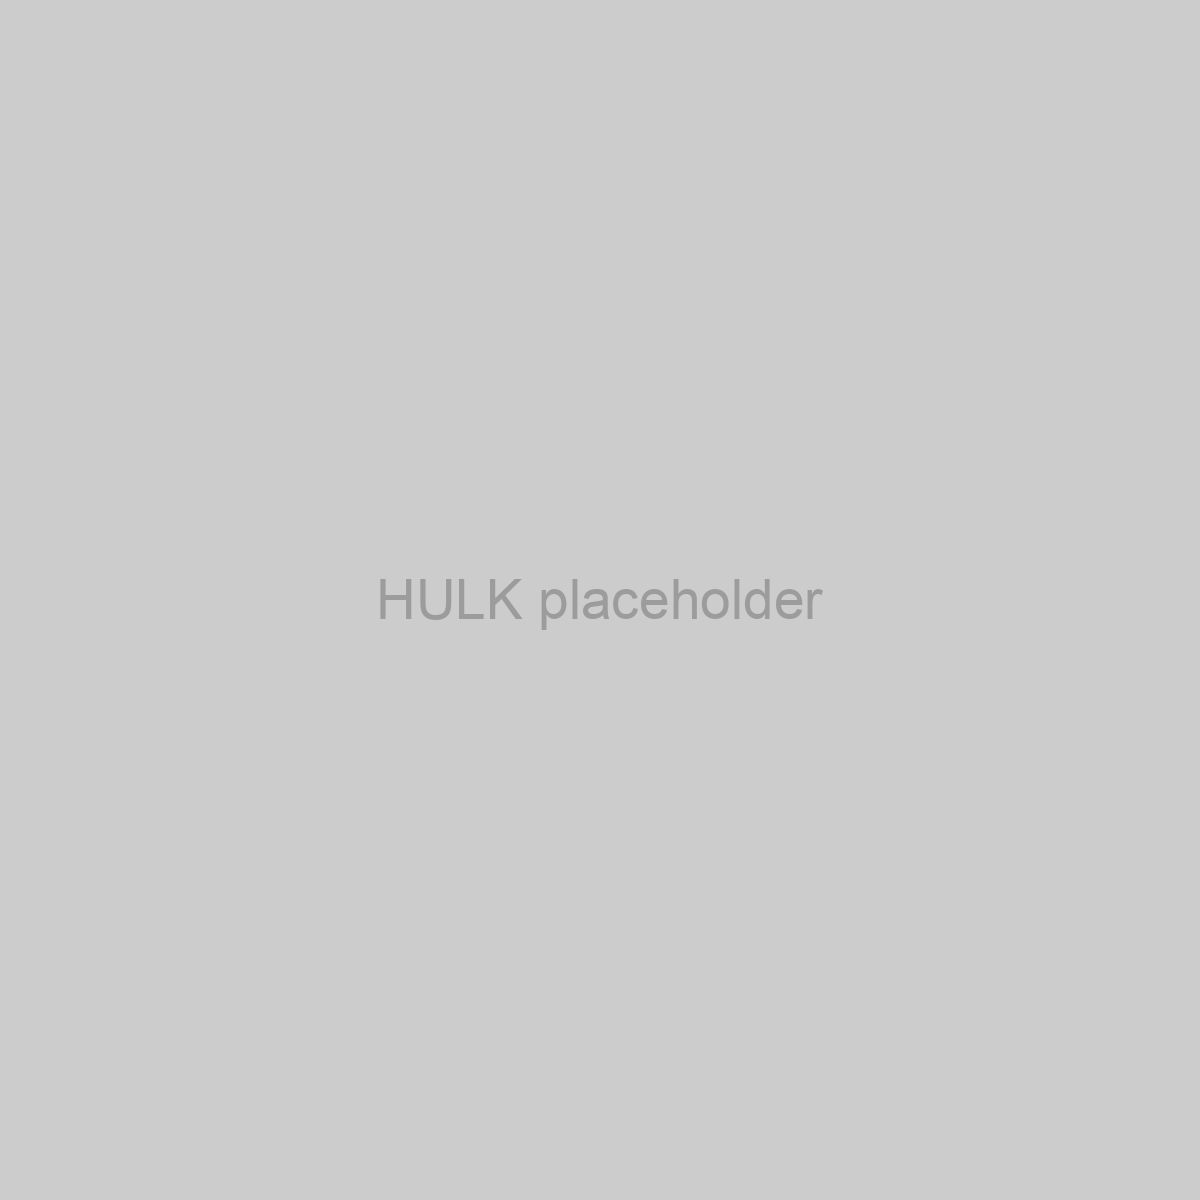 HULK Placeholder Image